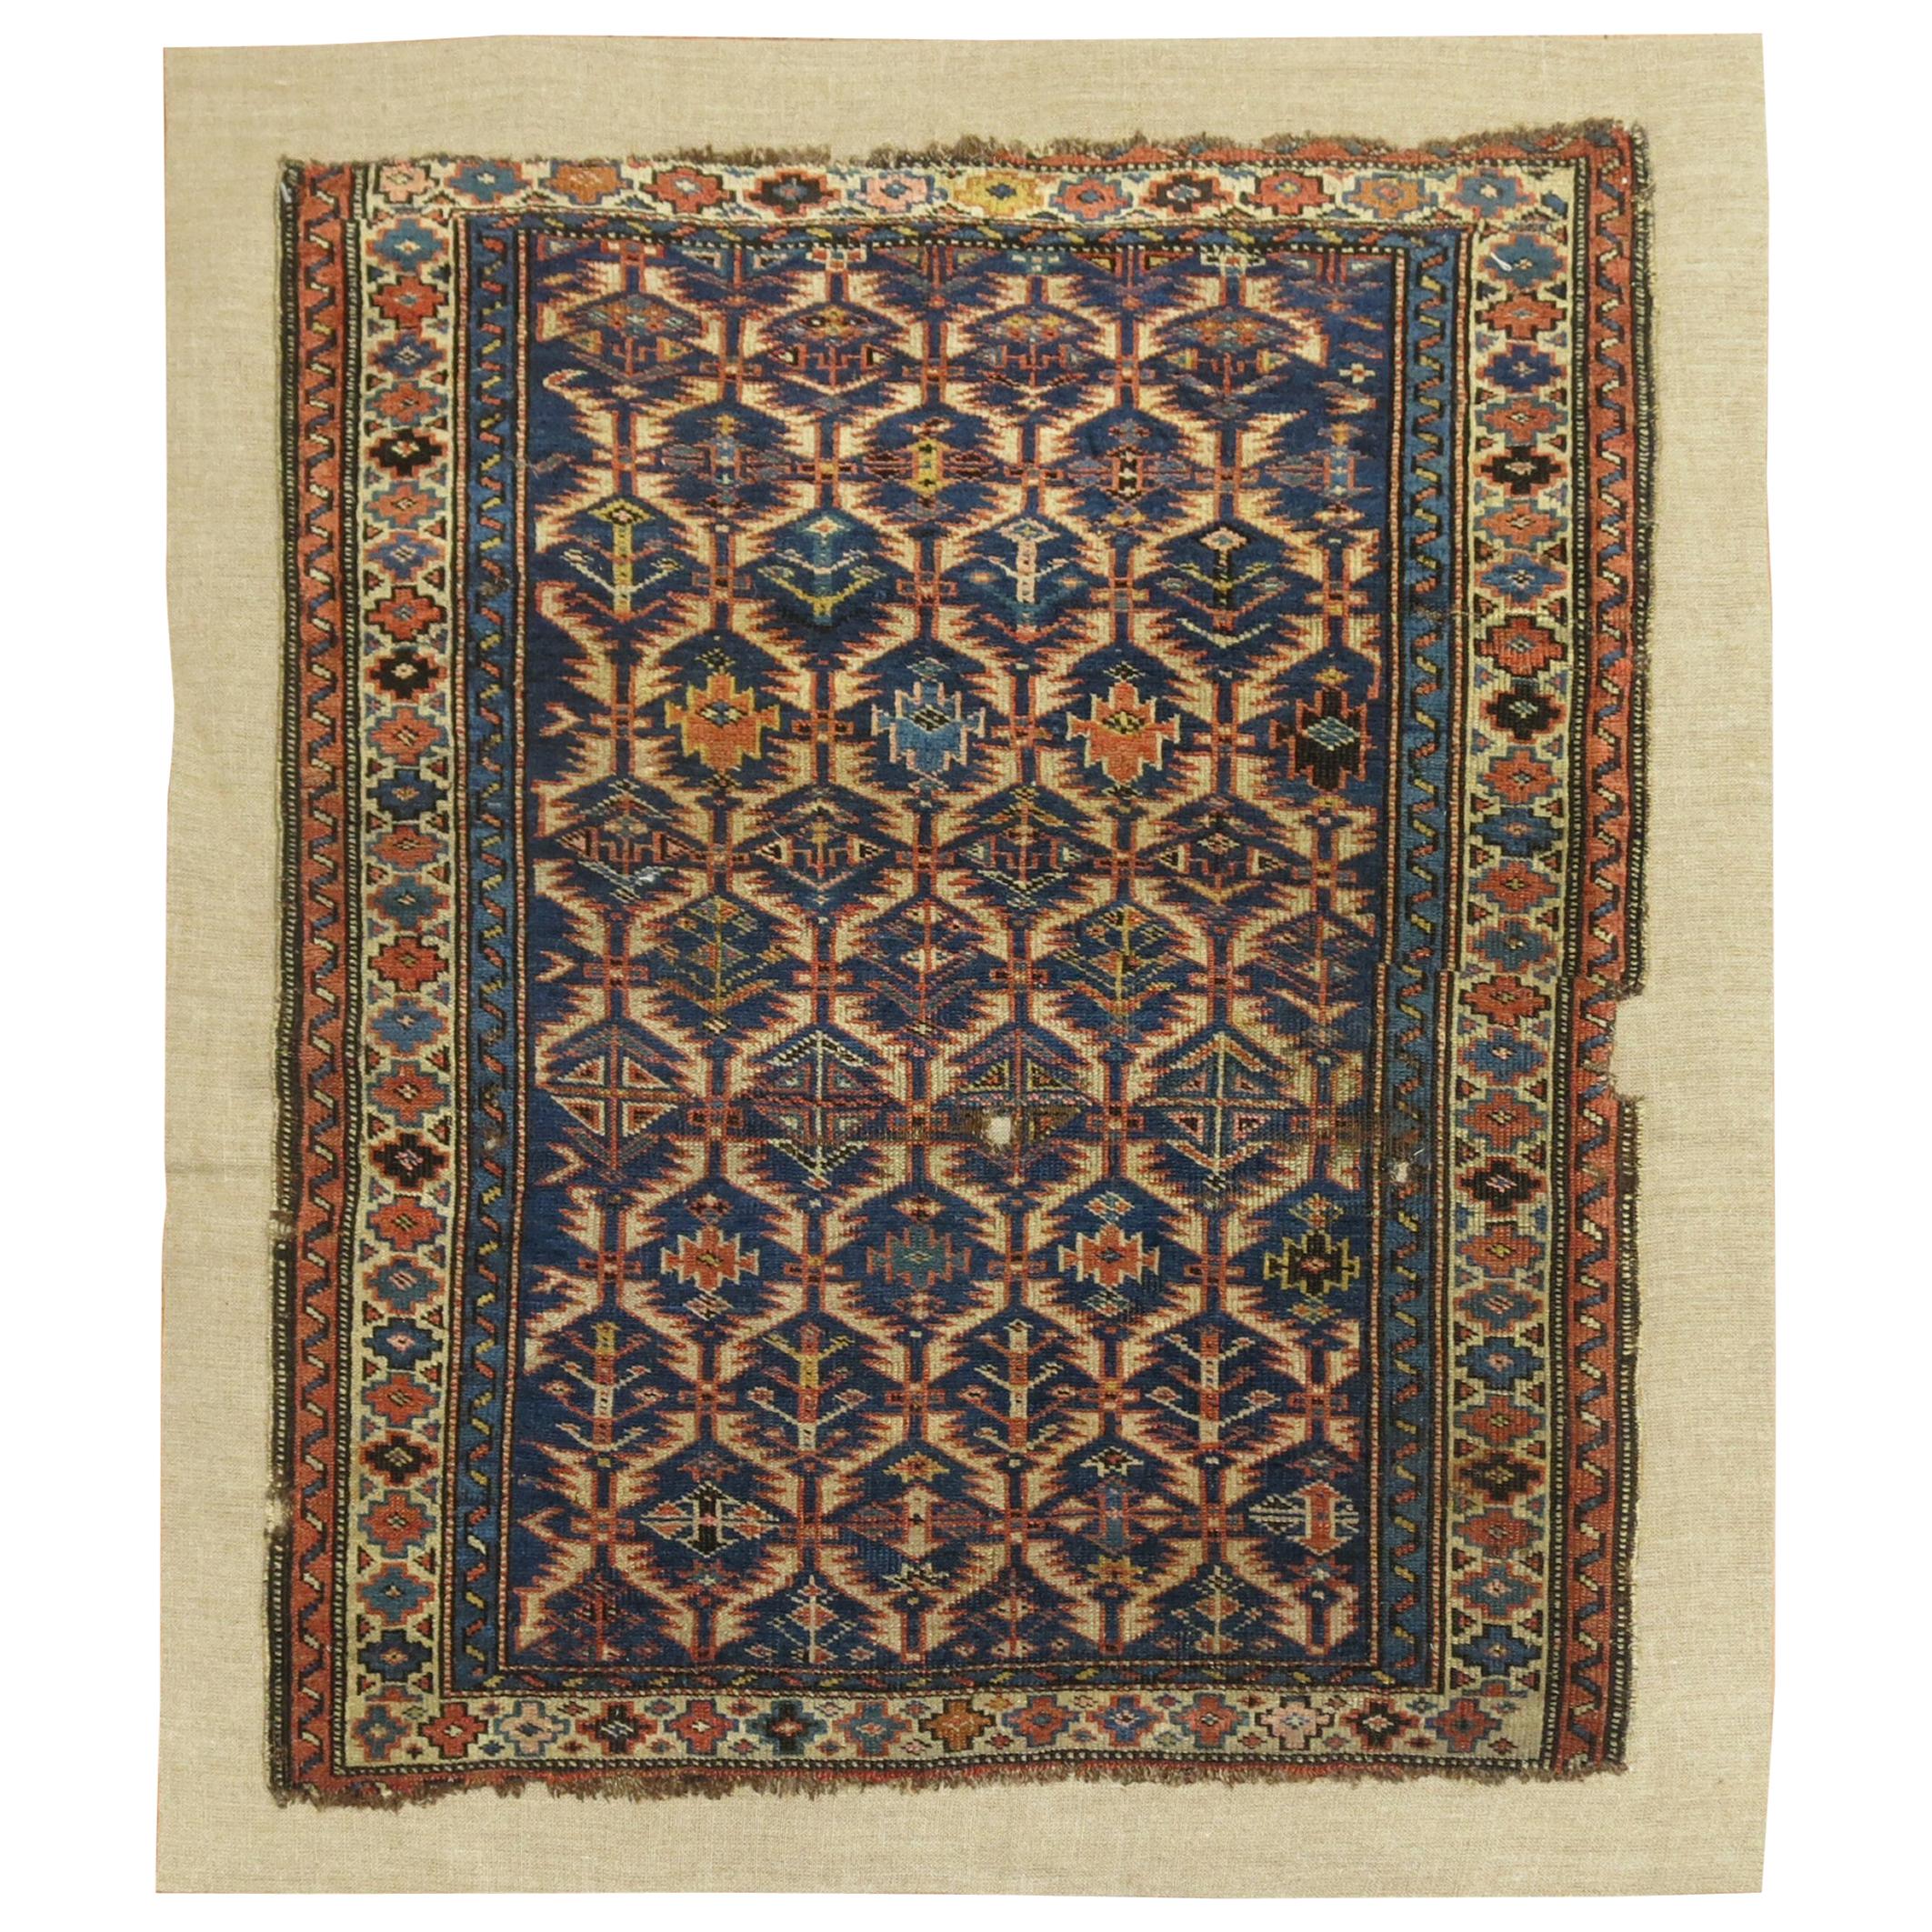 Antique Caucasian Rug Stitched on Linen